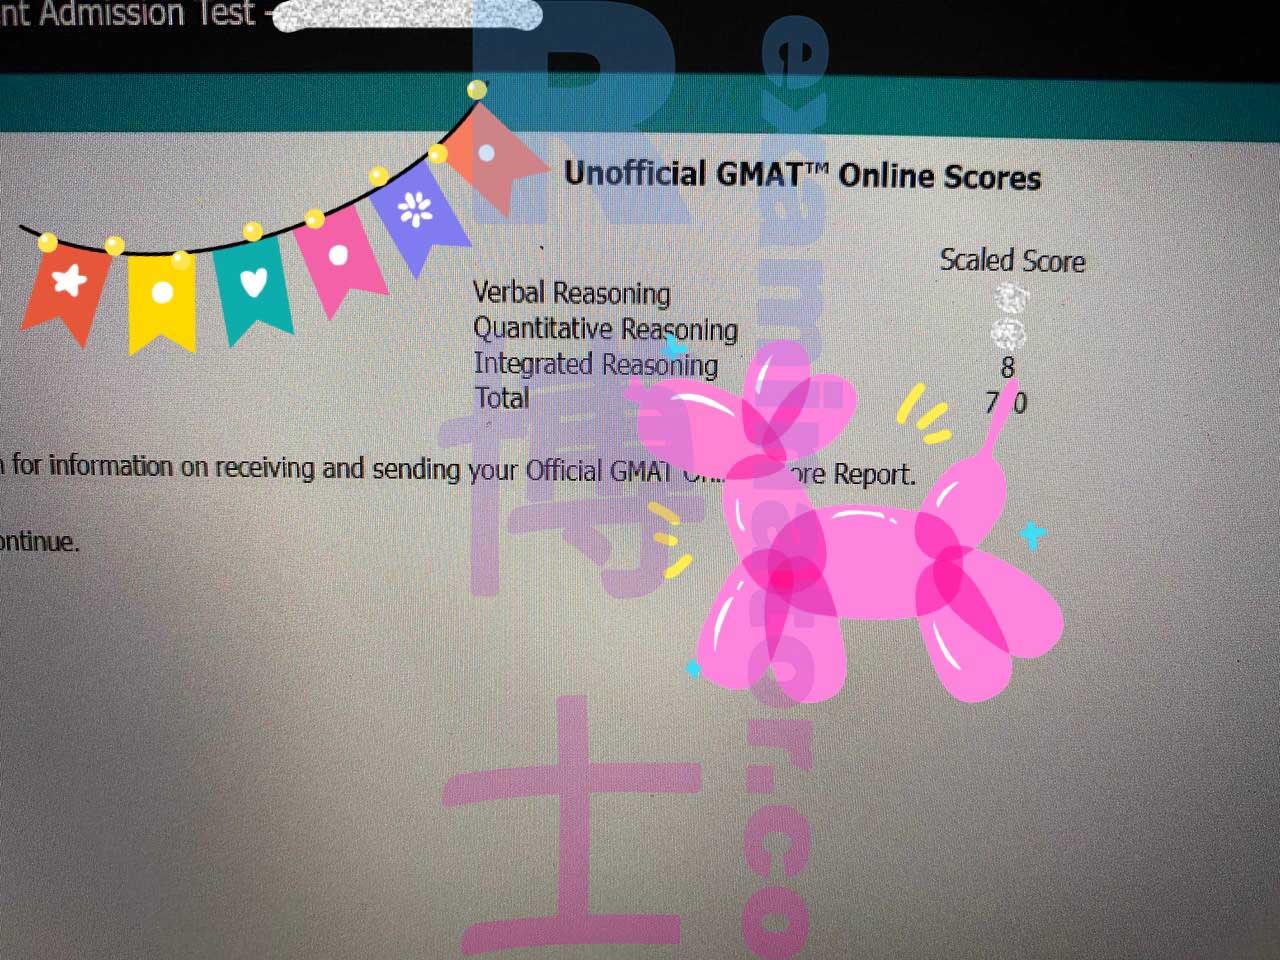 score image for GMAT Proxy Testing success story #392